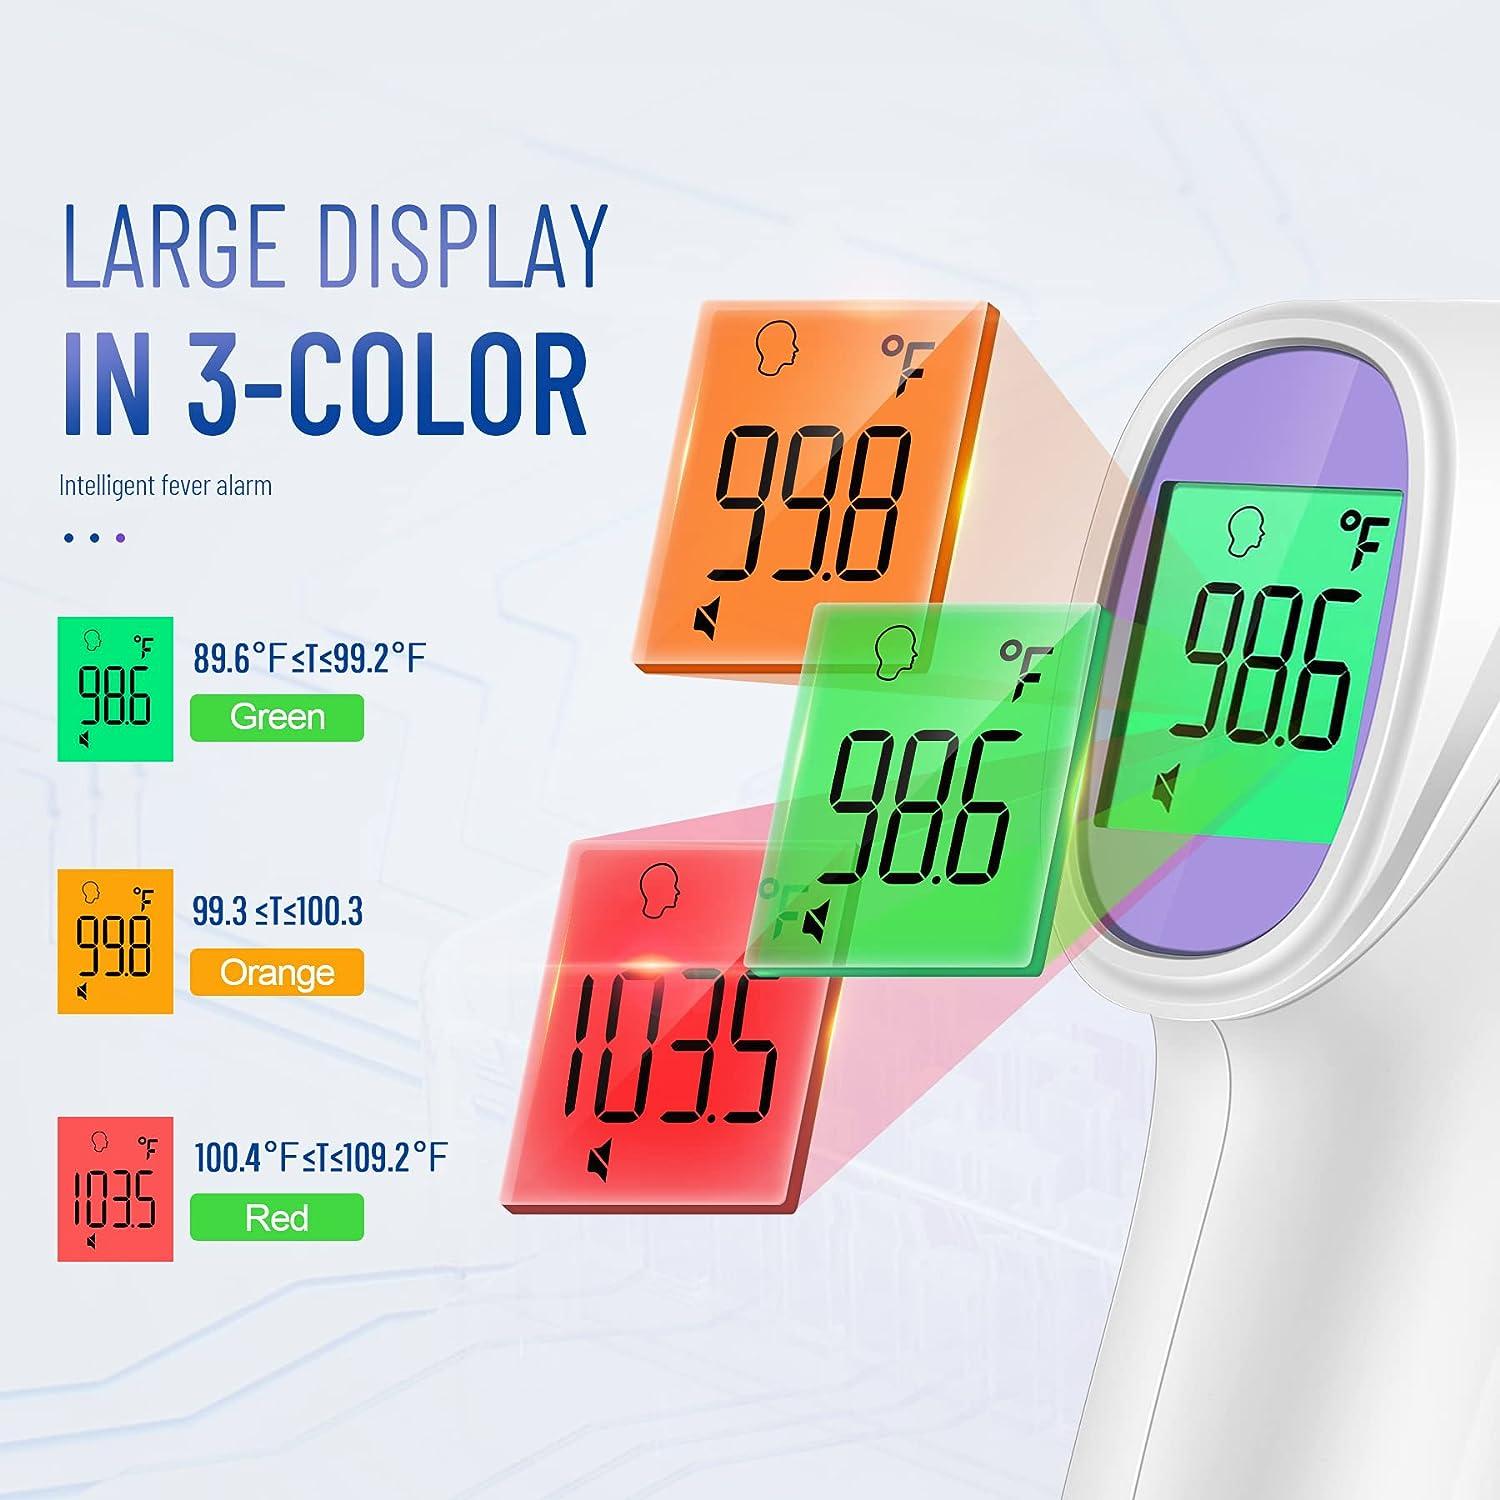 Revitalife Infrared Non-Contact Thermometer - Purple